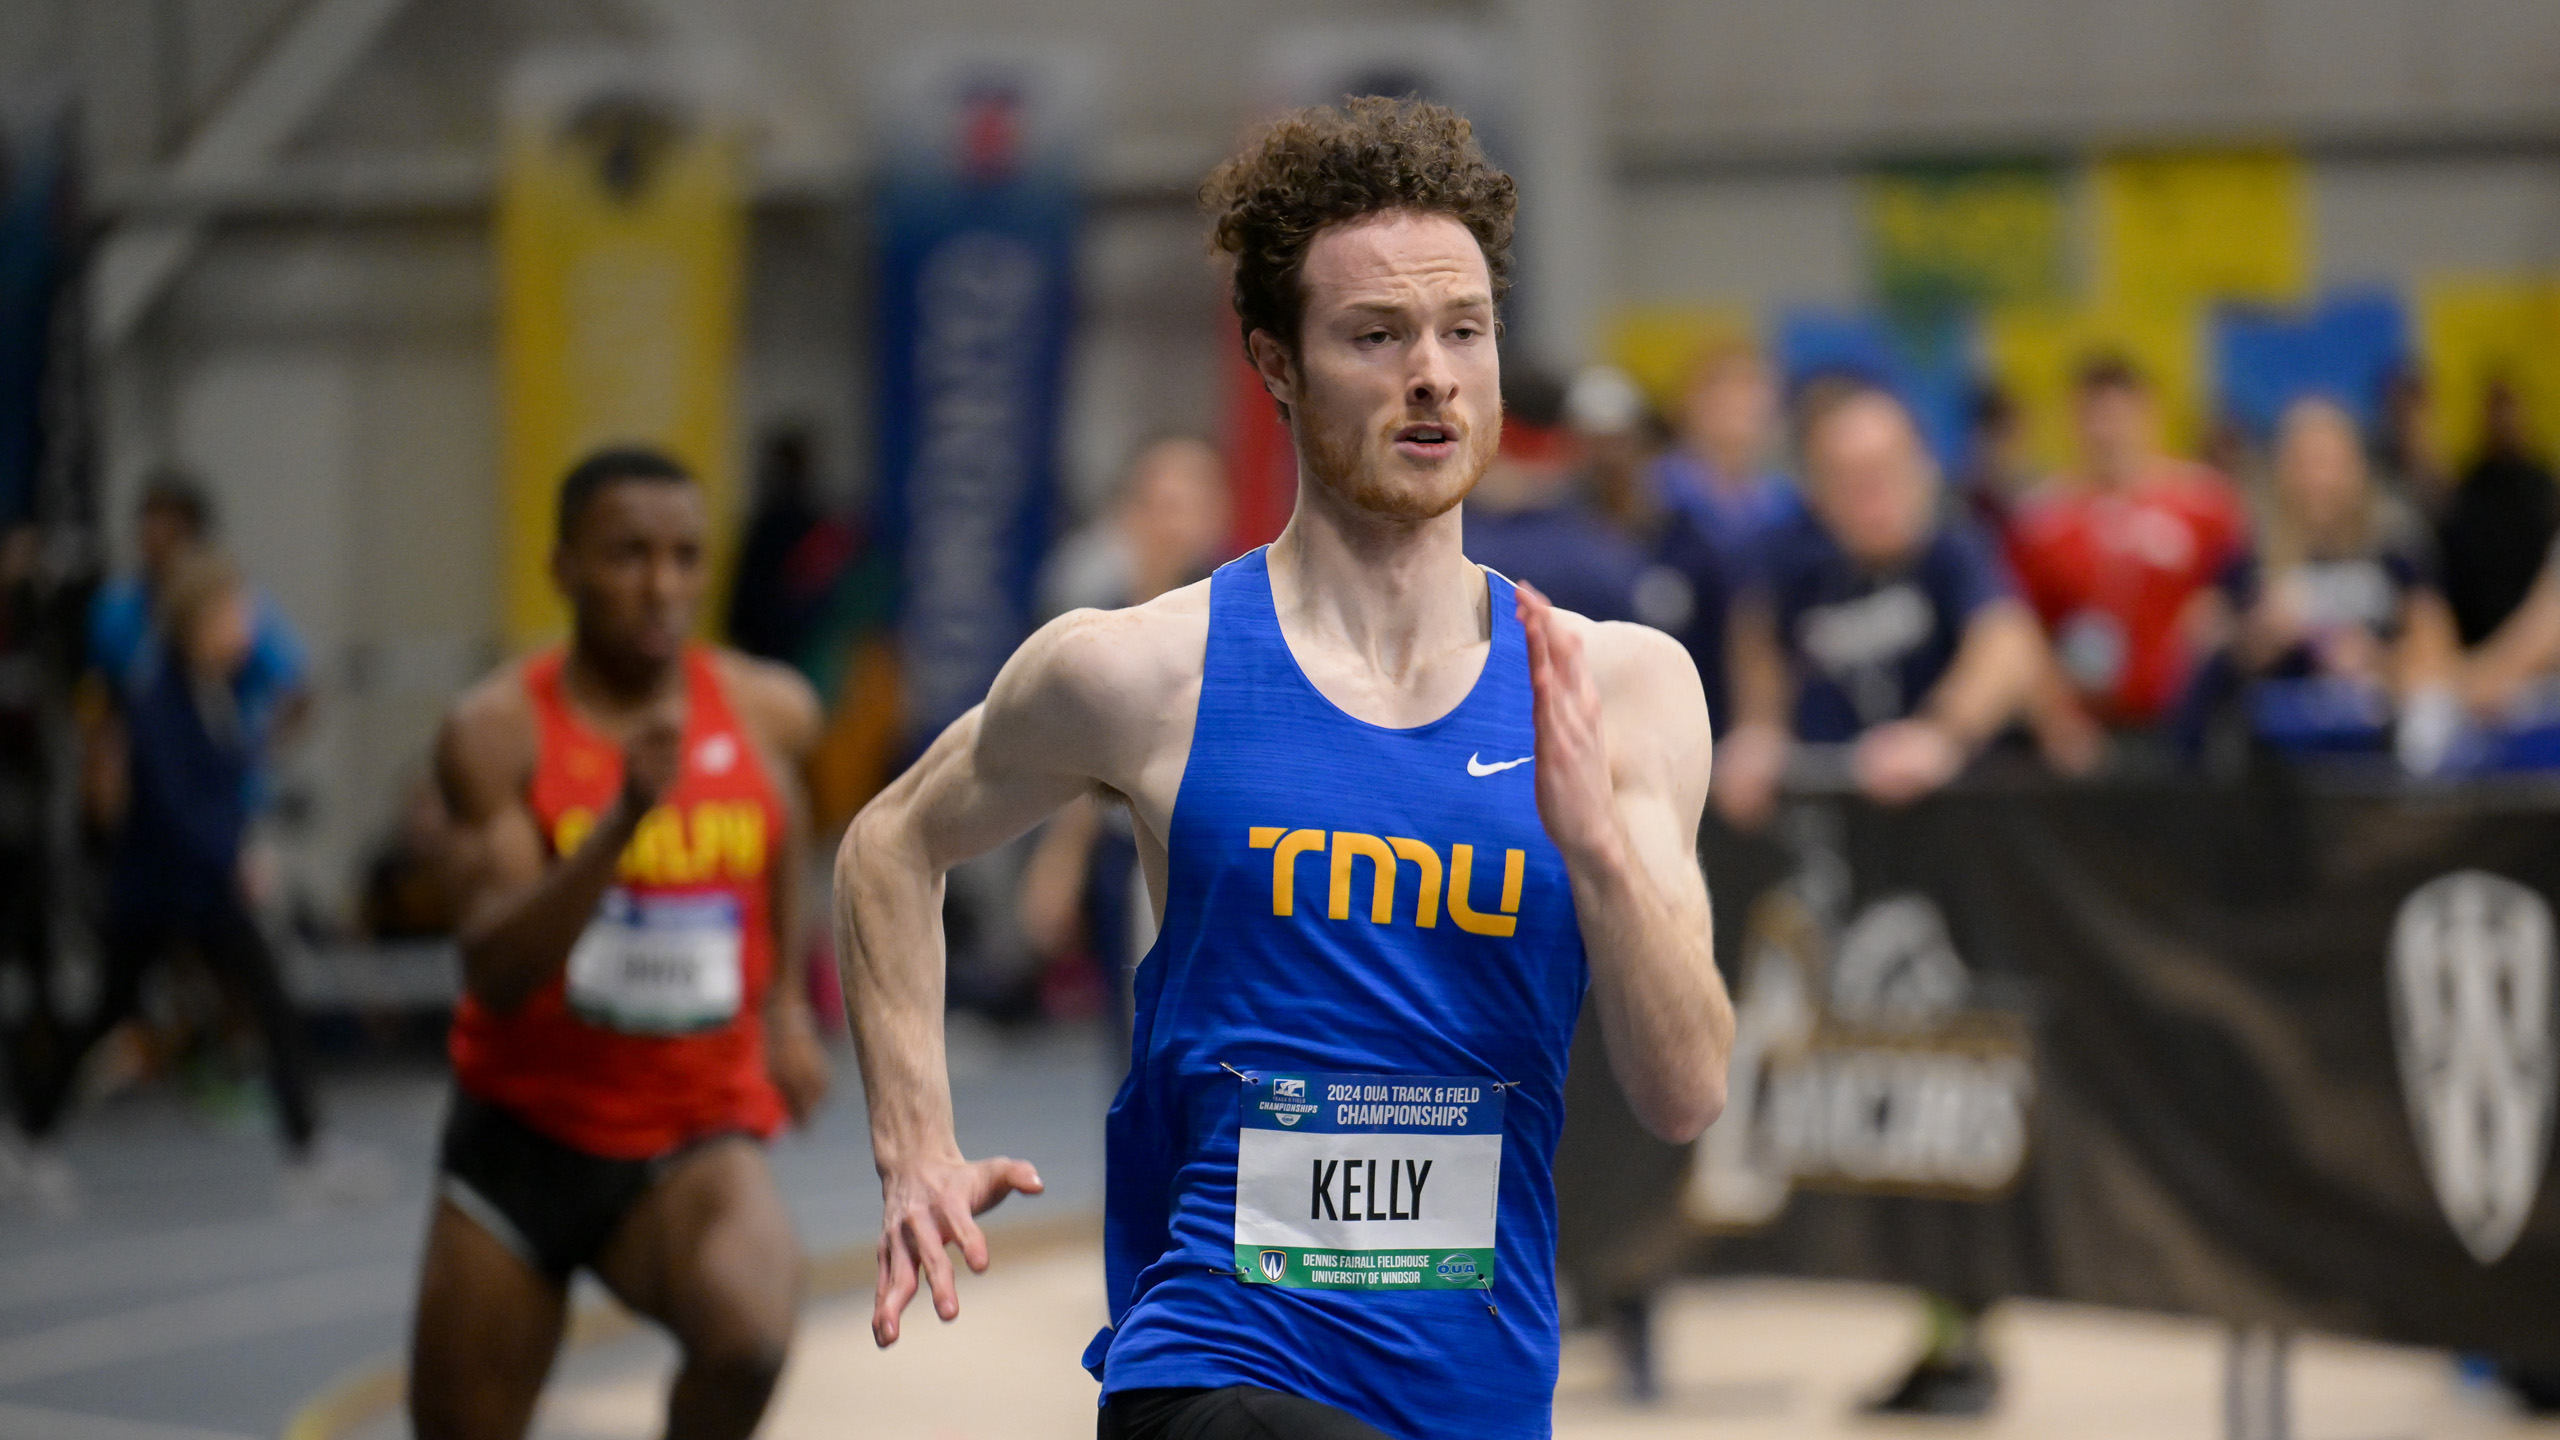 TMU sprinter Aaron Kelly sprints